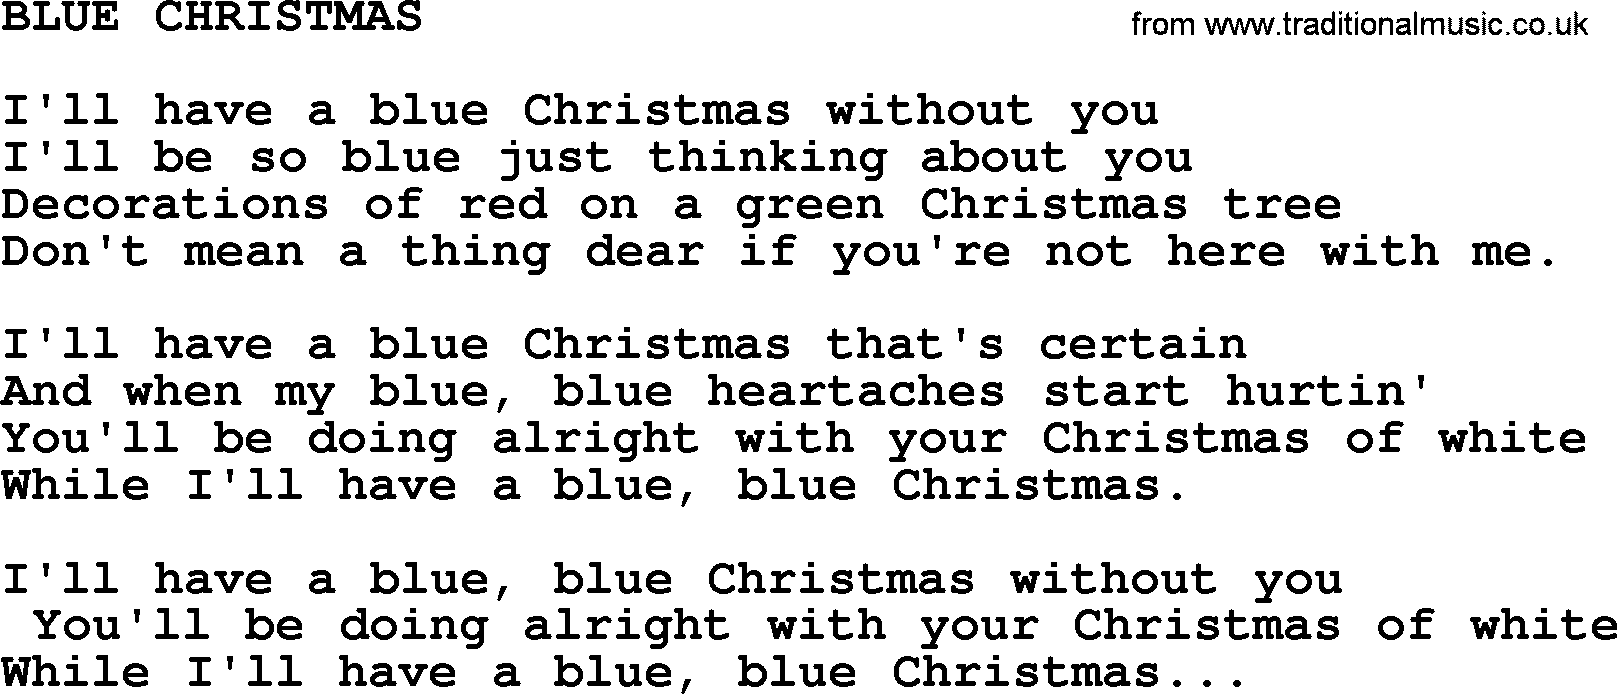 Merle Haggard song: Blue Christmas, lyrics.